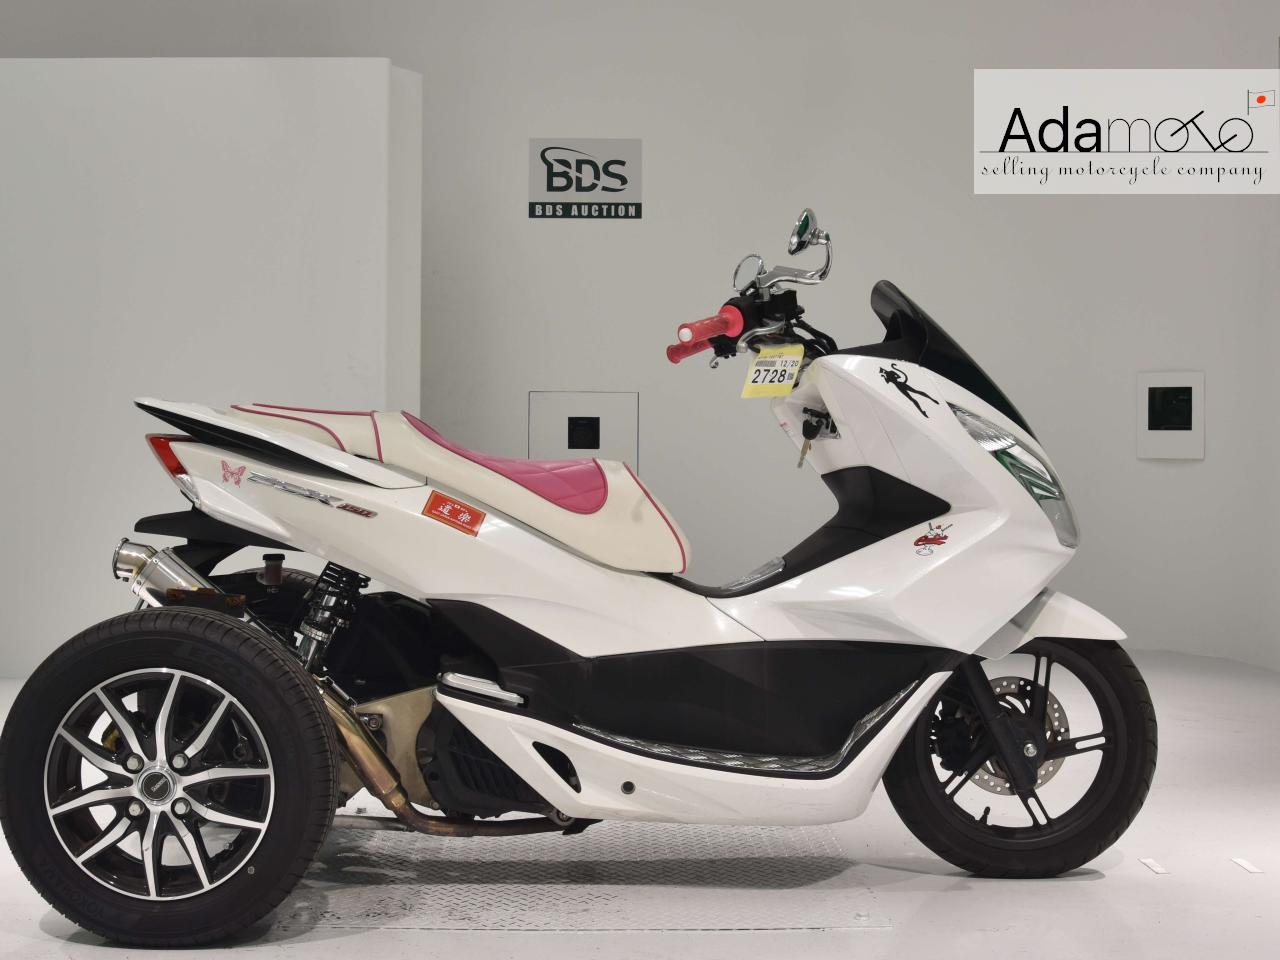 Honda PCX150 2 TRIKE - Adamoto - Motorcycles from Japan